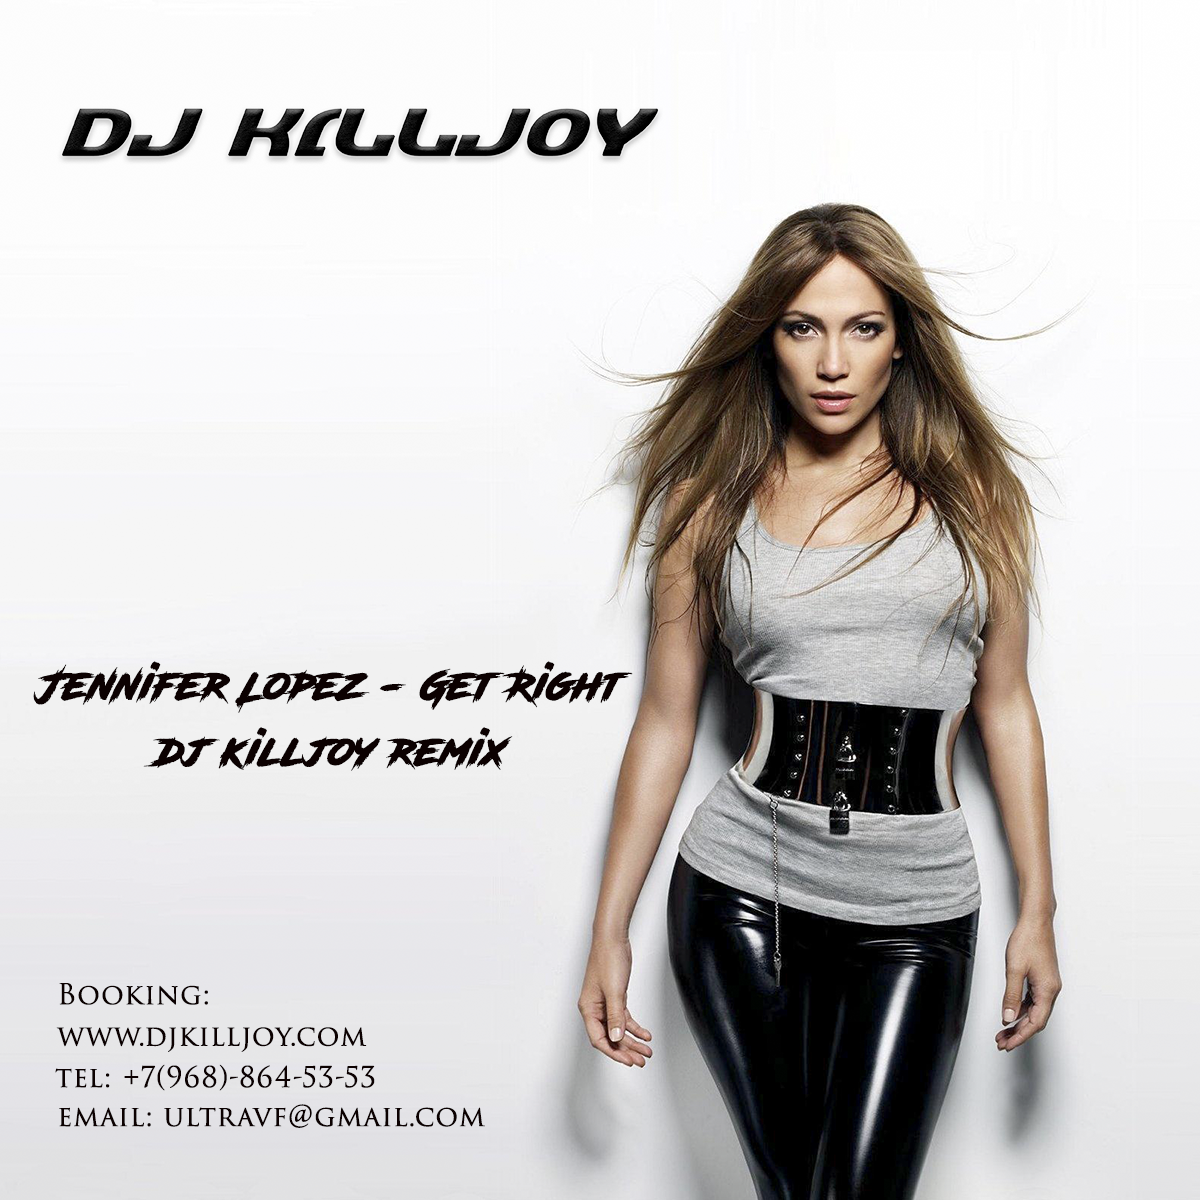 Jennifer Lopez - Get Right (Dj Killjoy Radio Edit) – DJ KILLJOY